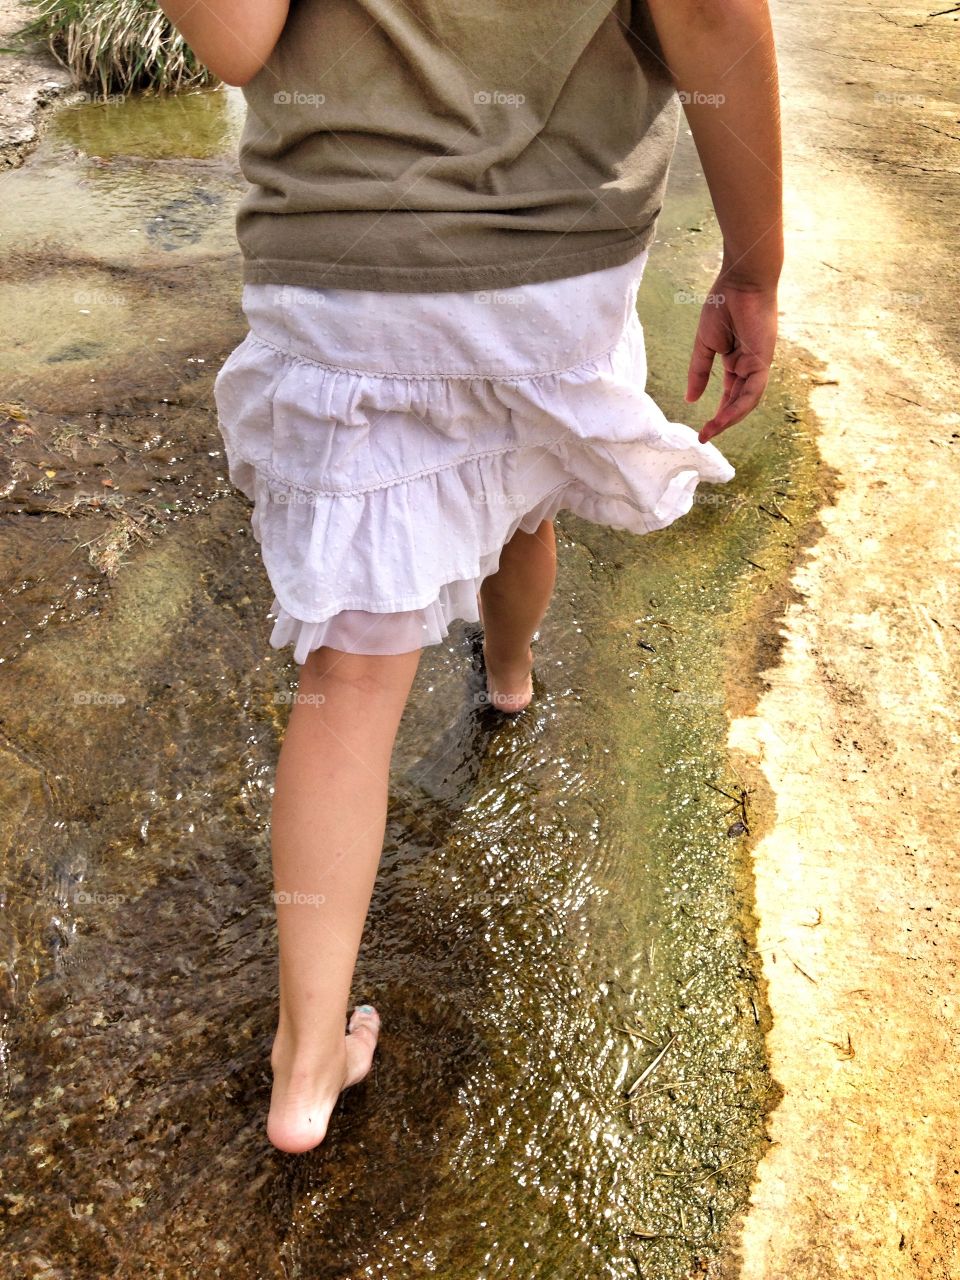 A wet walk. Girl walking in a small stream of water